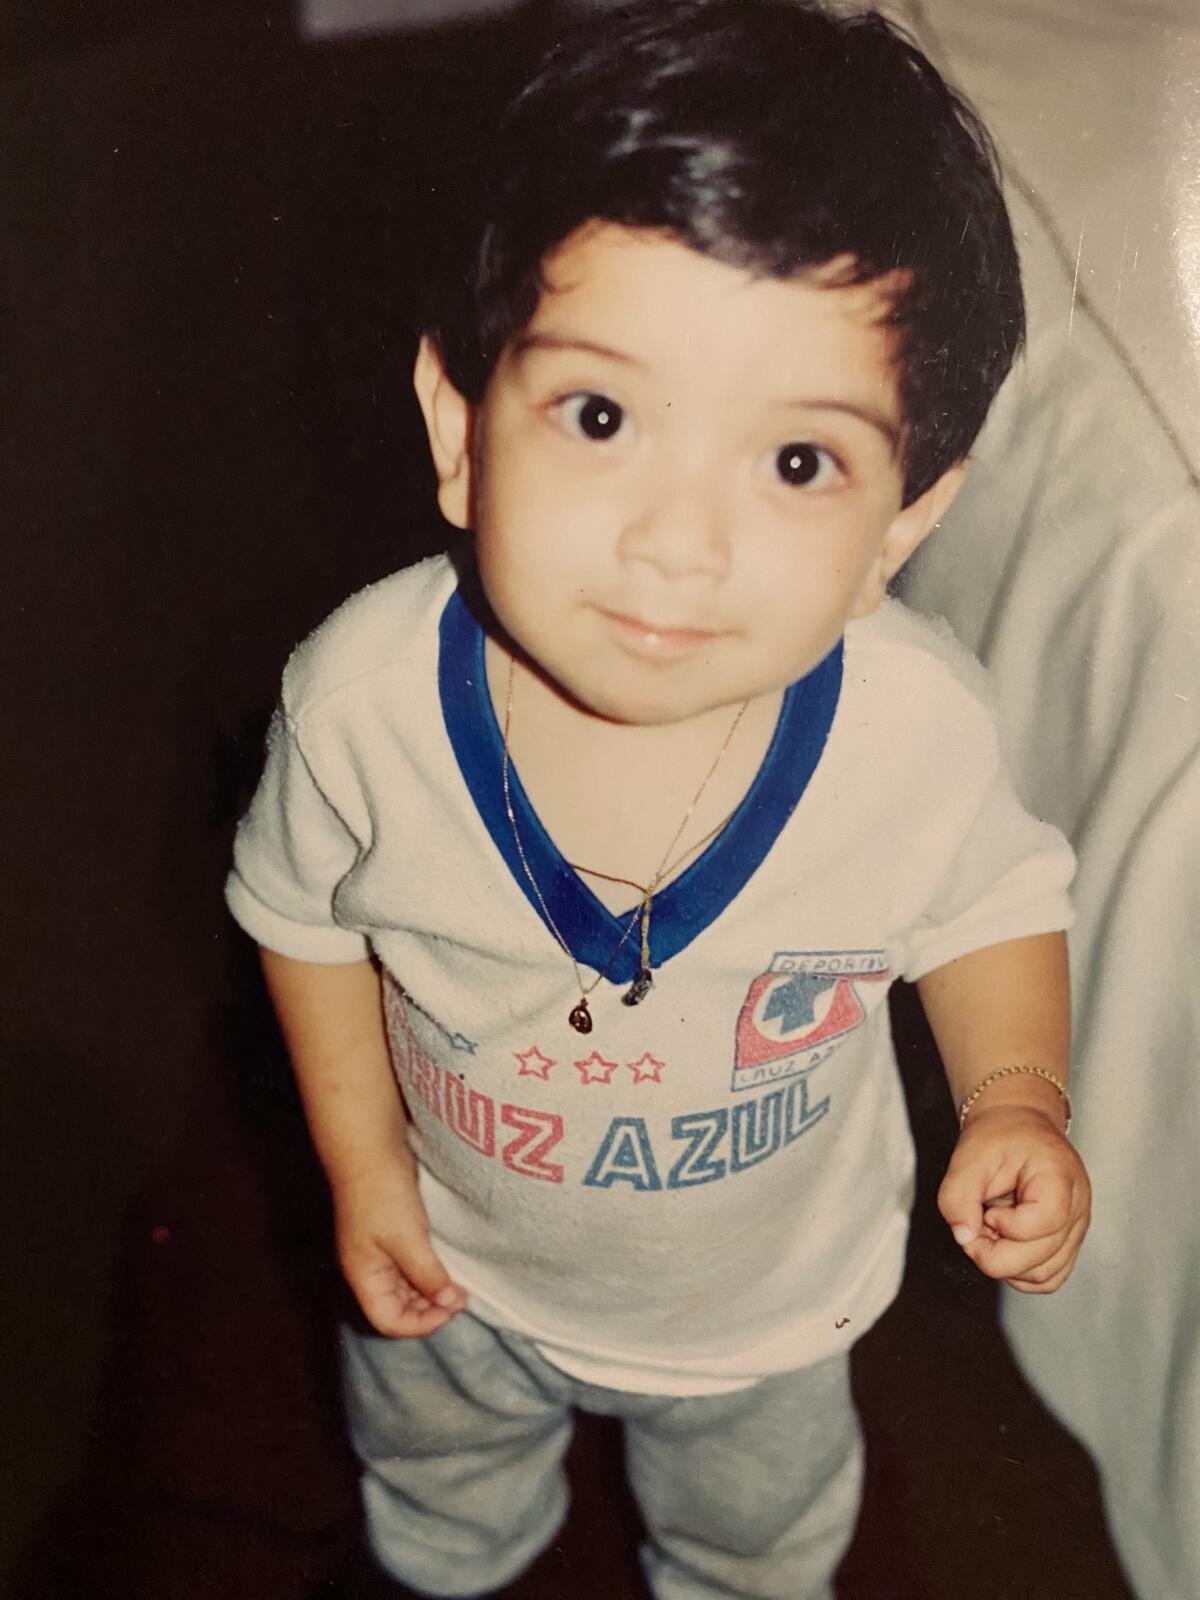 Reader Edgar Perez poses for the camera as a young child wearing a Cruz Azul shirt